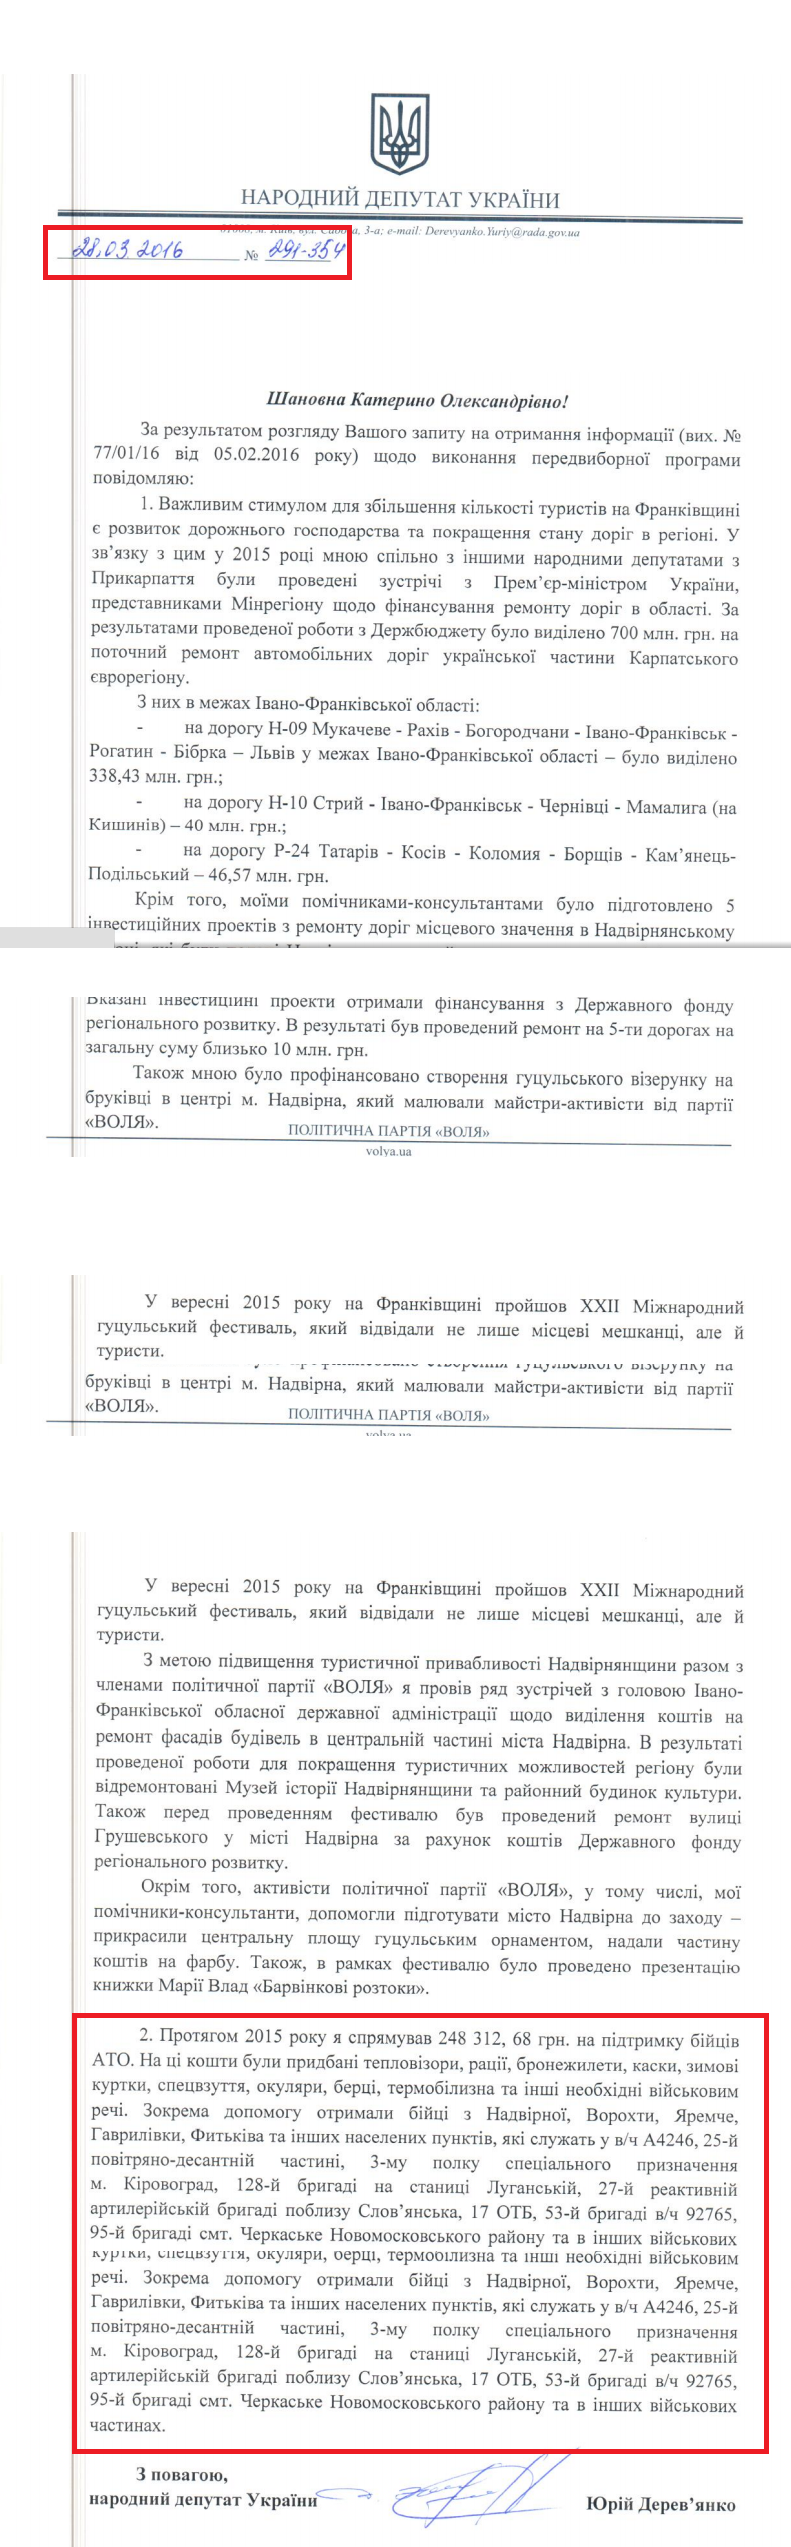 лист народного депутата